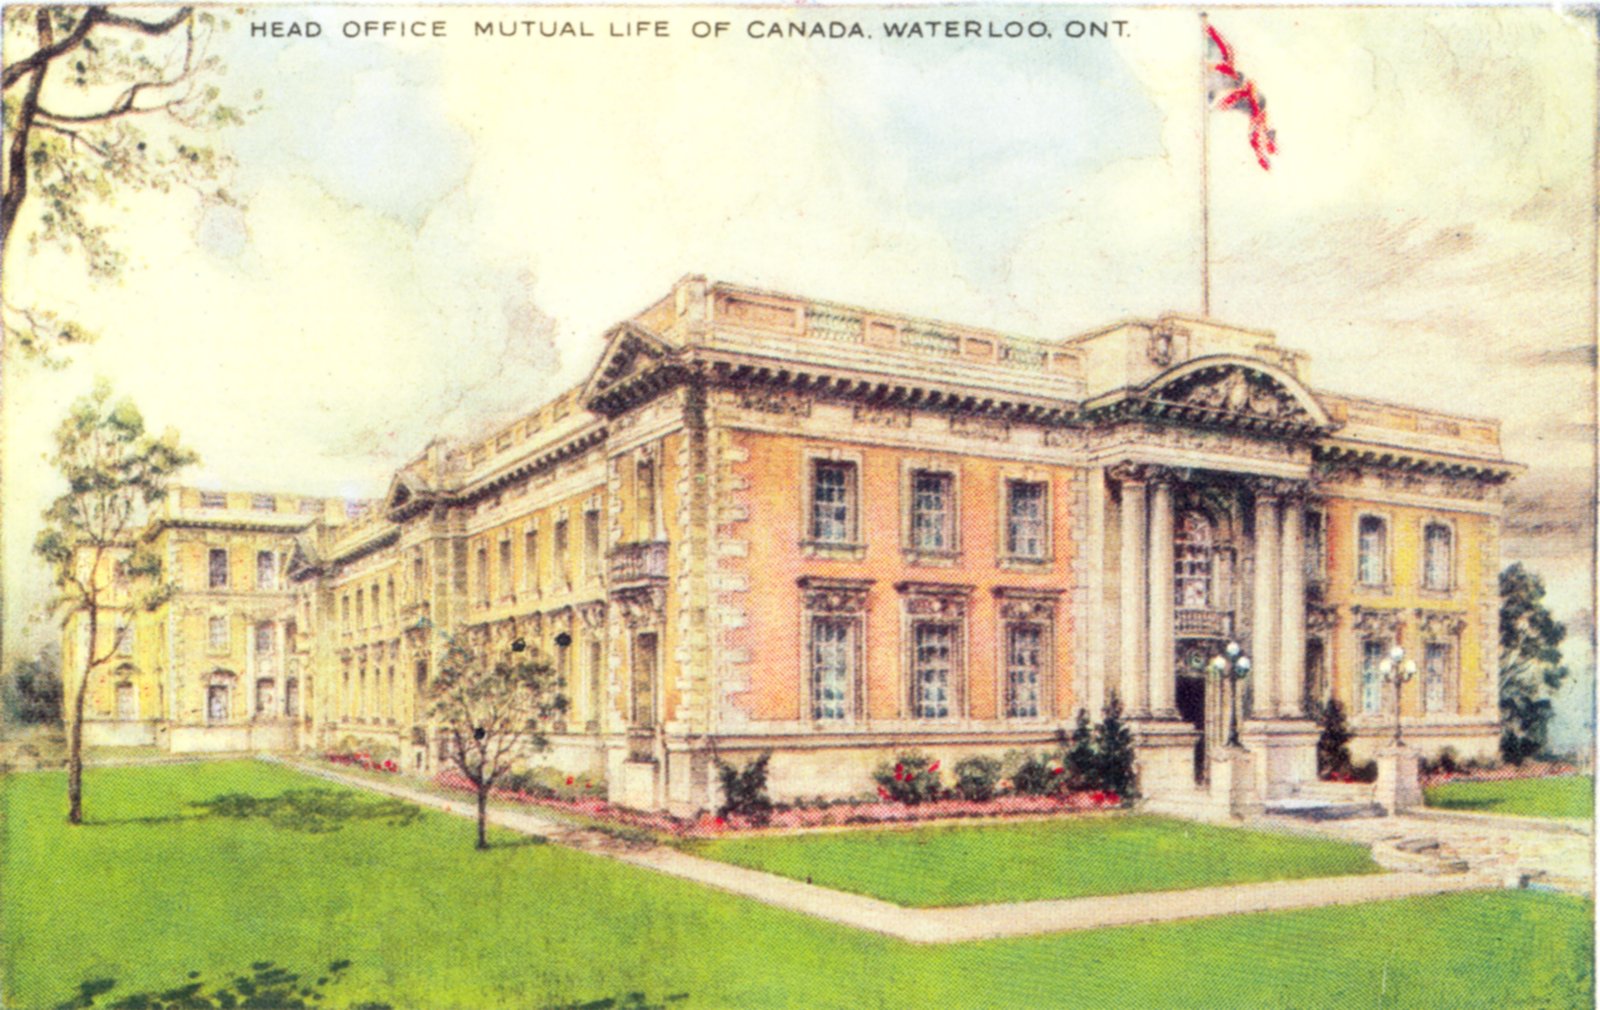 Mutual Life of Canada Assurance Company of Canada